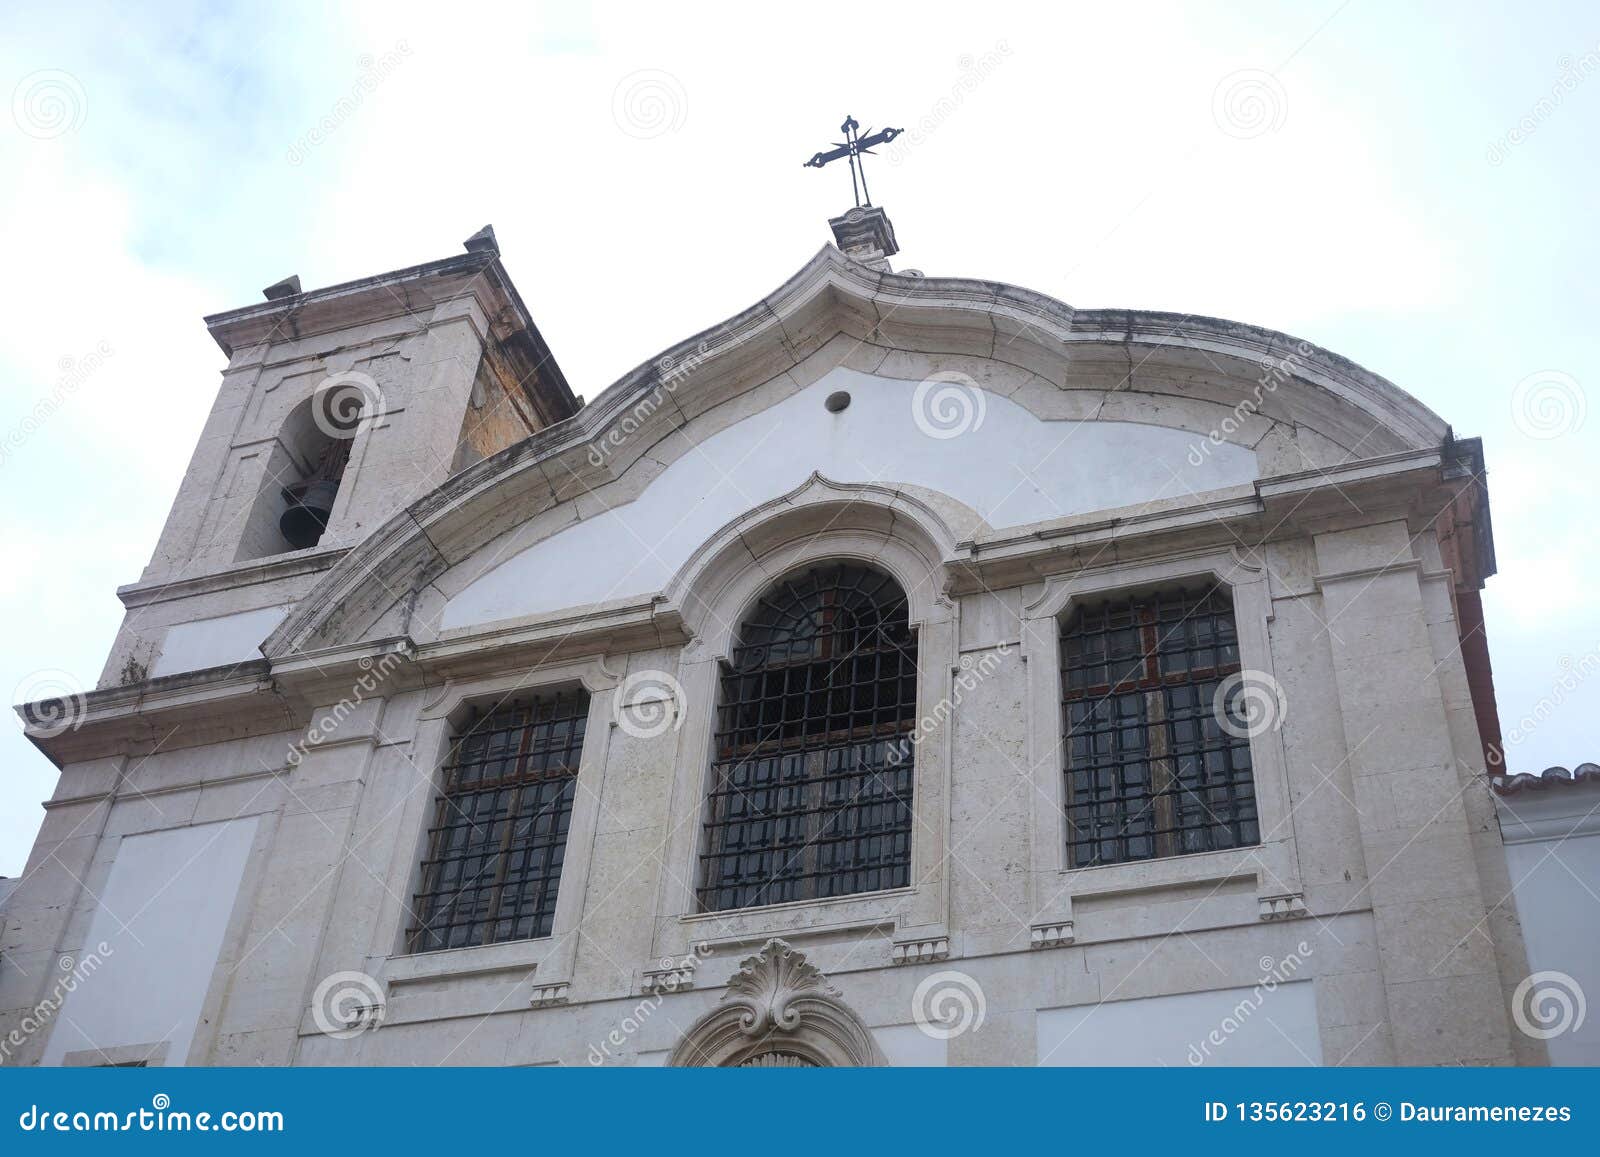 portuguese church - faith and art of portugal